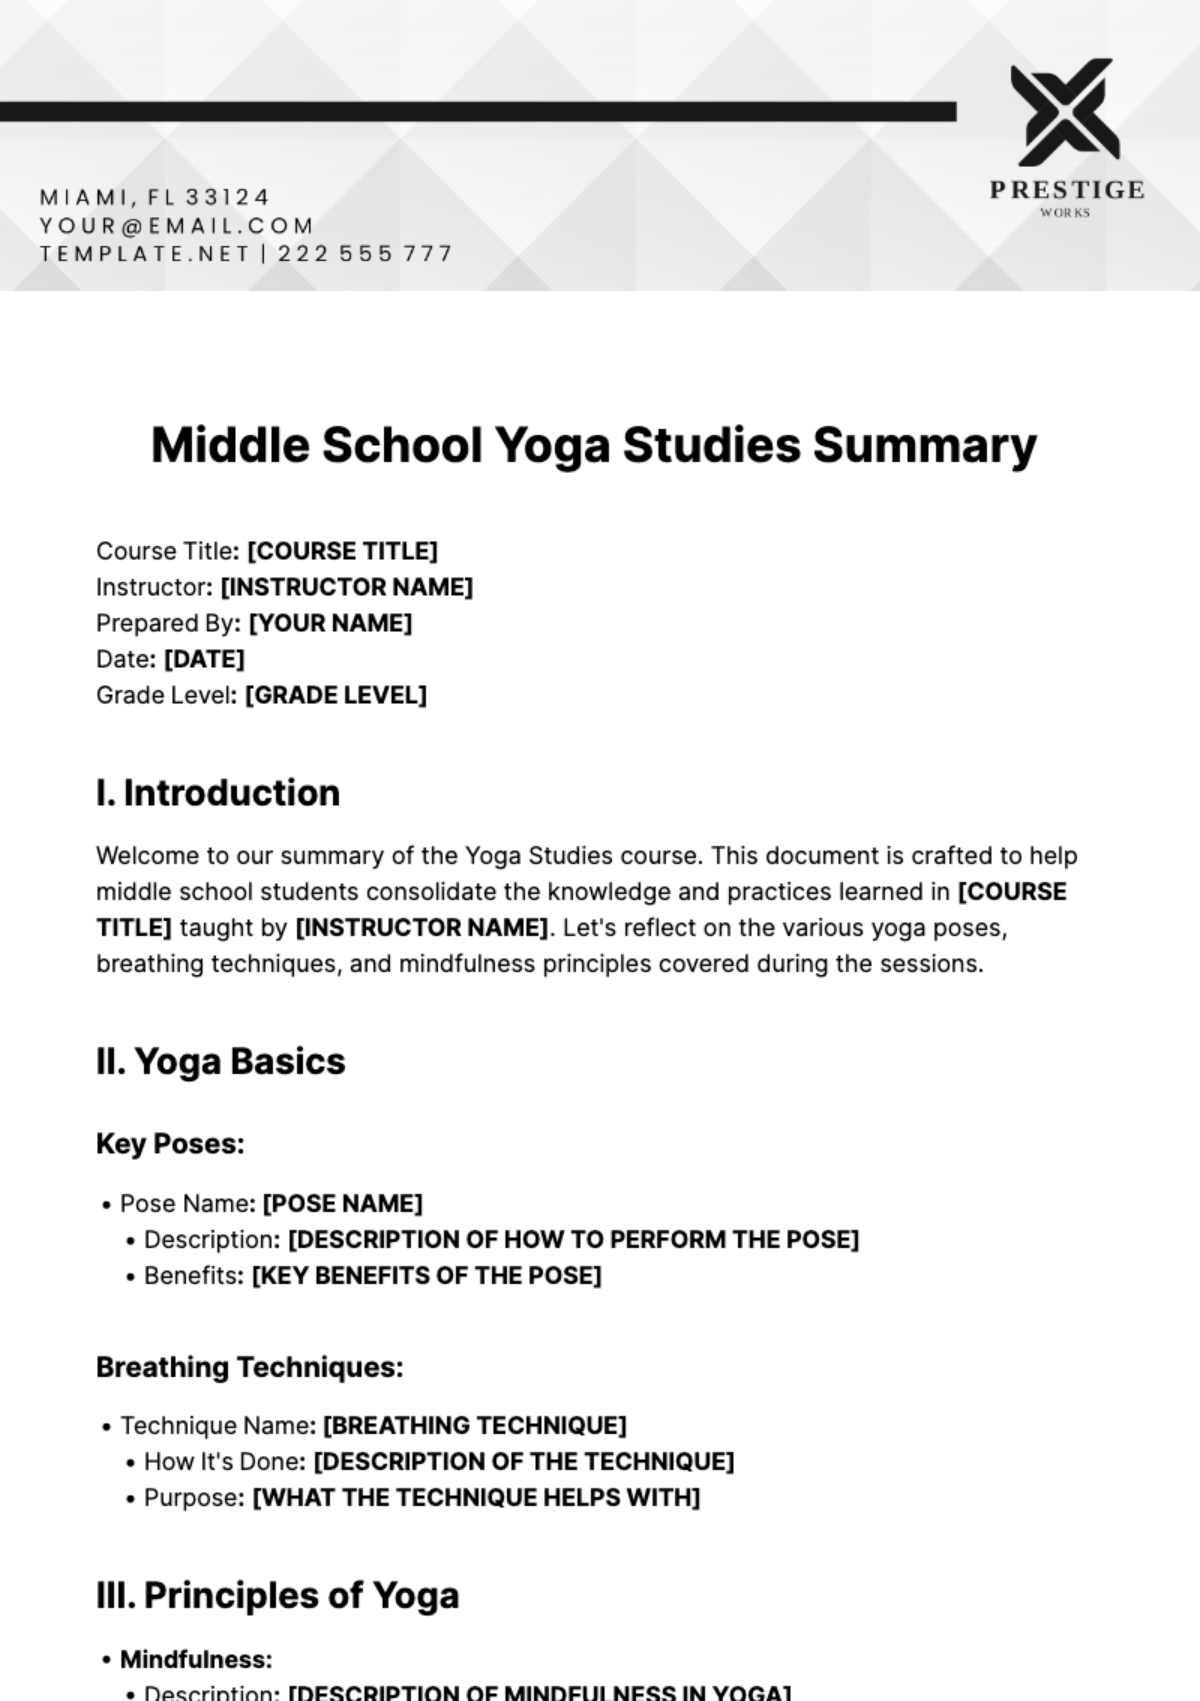 Middle School Yoga Studies Summary Template